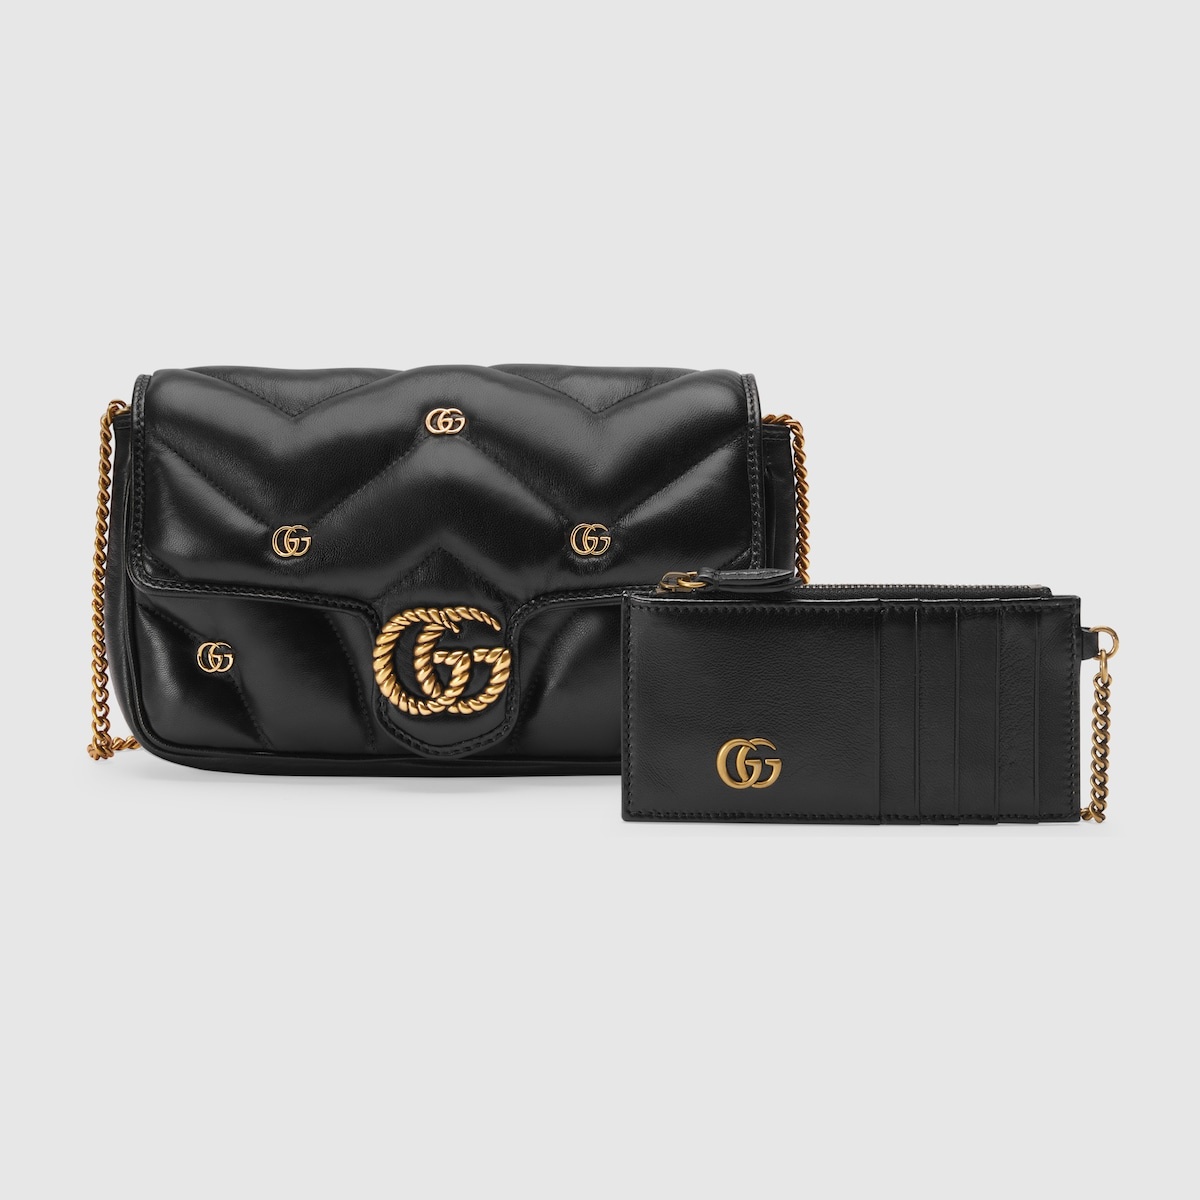 GG Marmont mini bag - 4